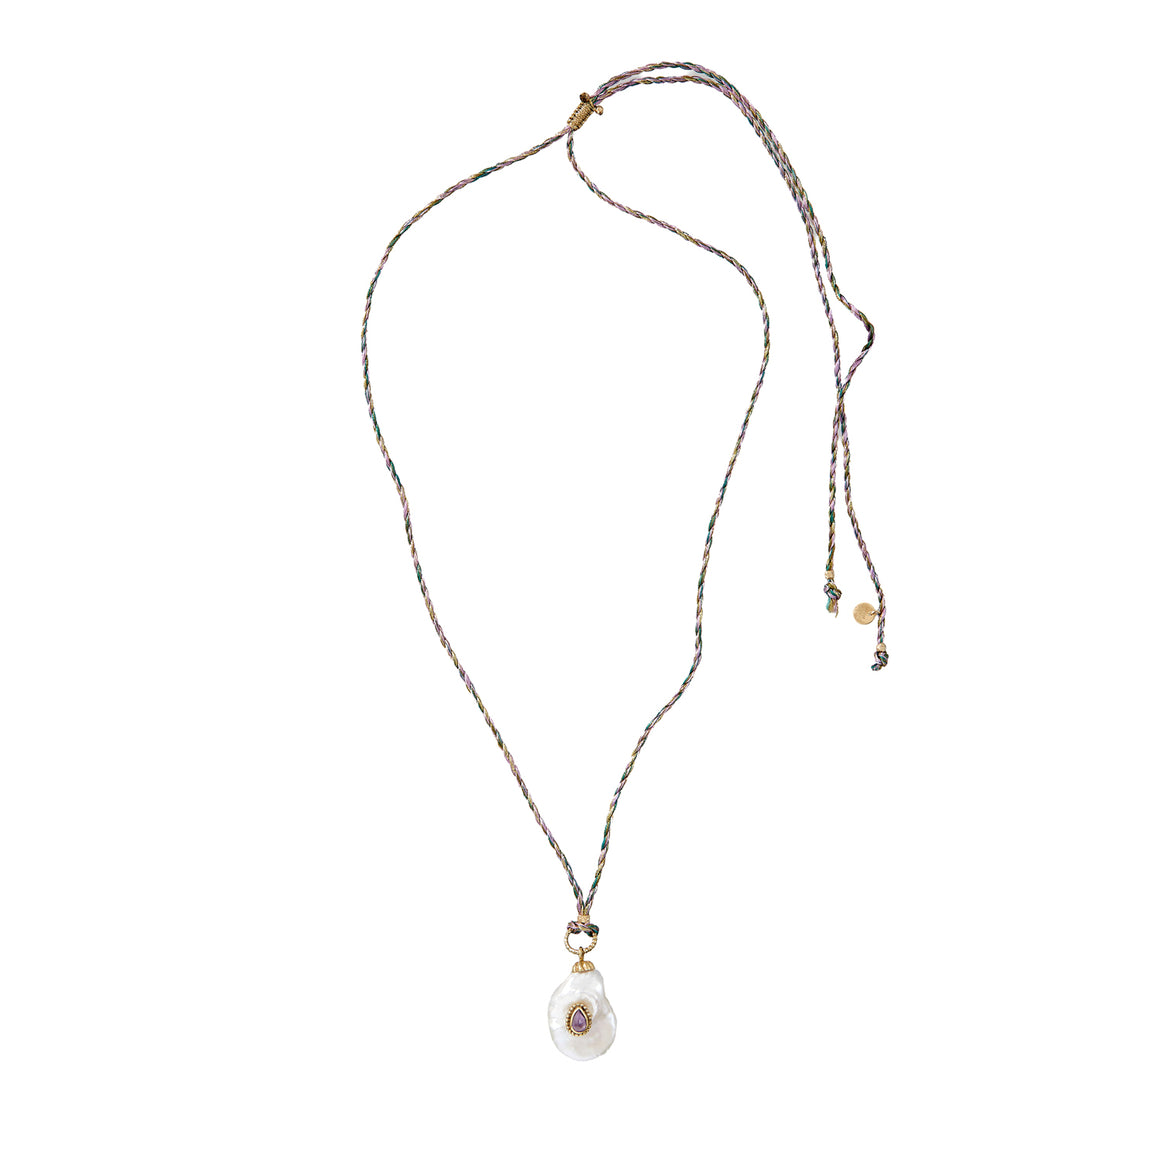 NAIADE Collier Perle baroque Améthyste sur cordon de soie - Argent 925 plaqué or